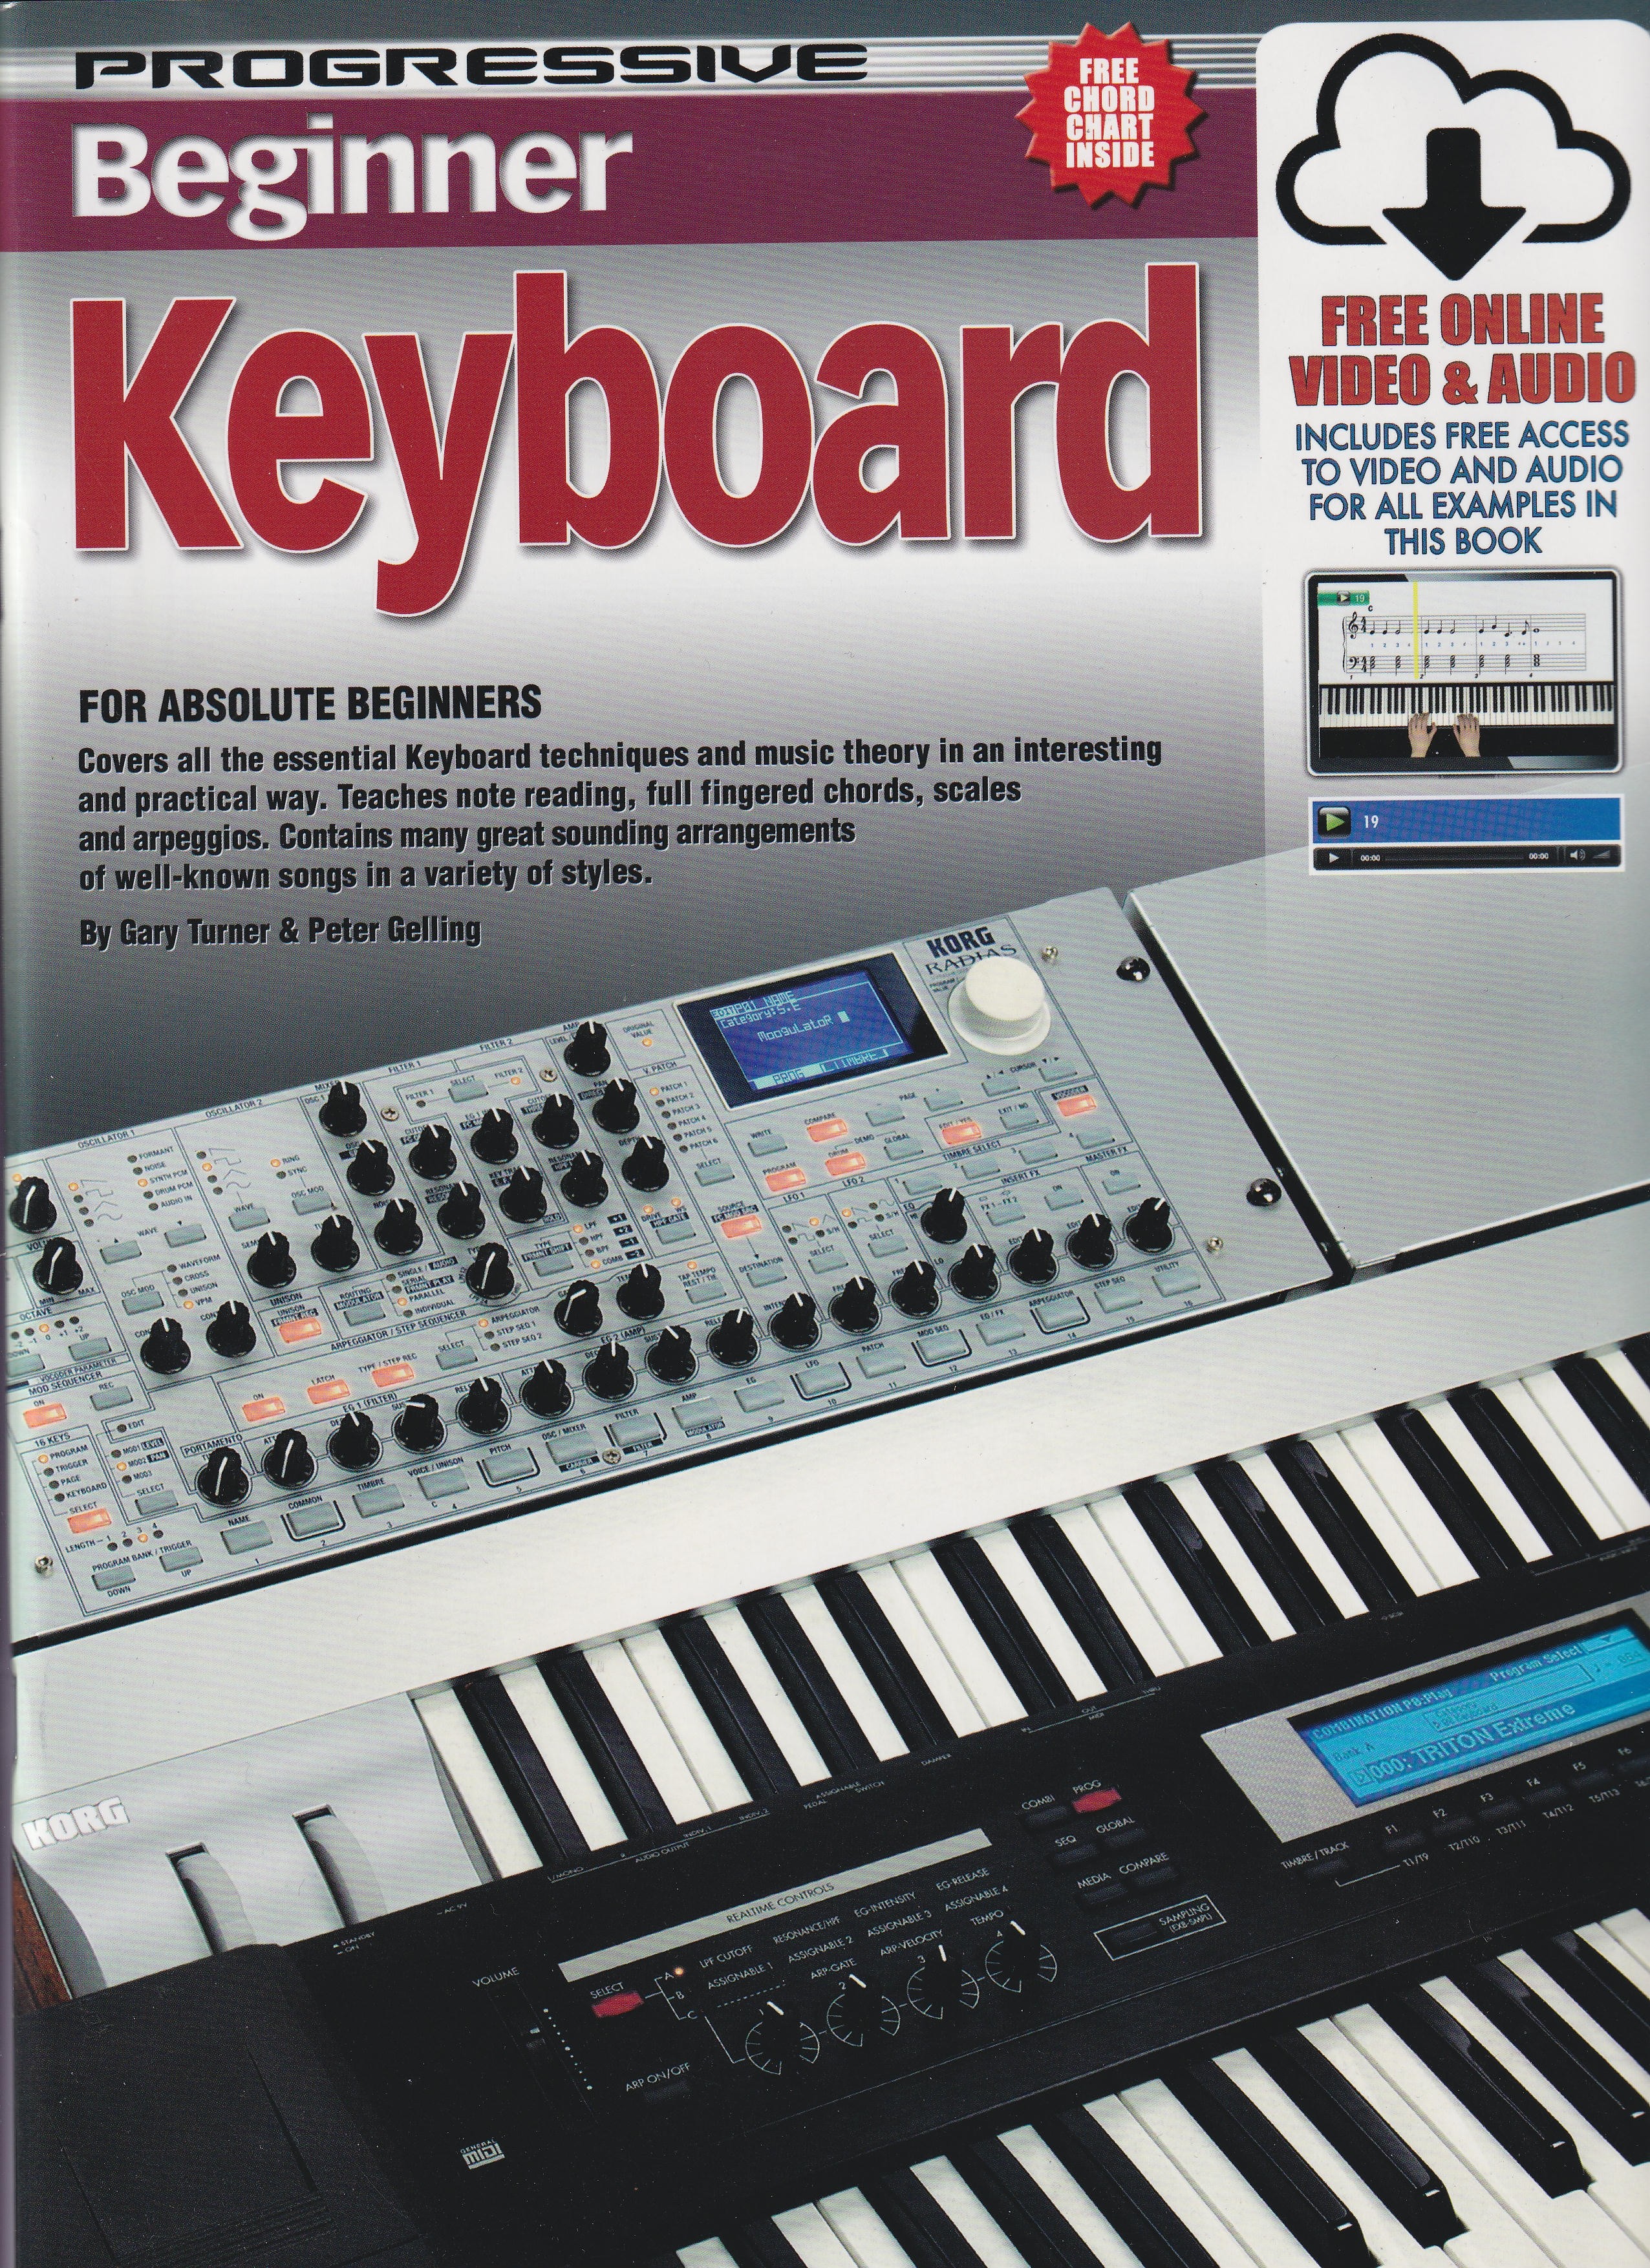 Progressive Beginner Keyboard (Free Online Video & Audio)